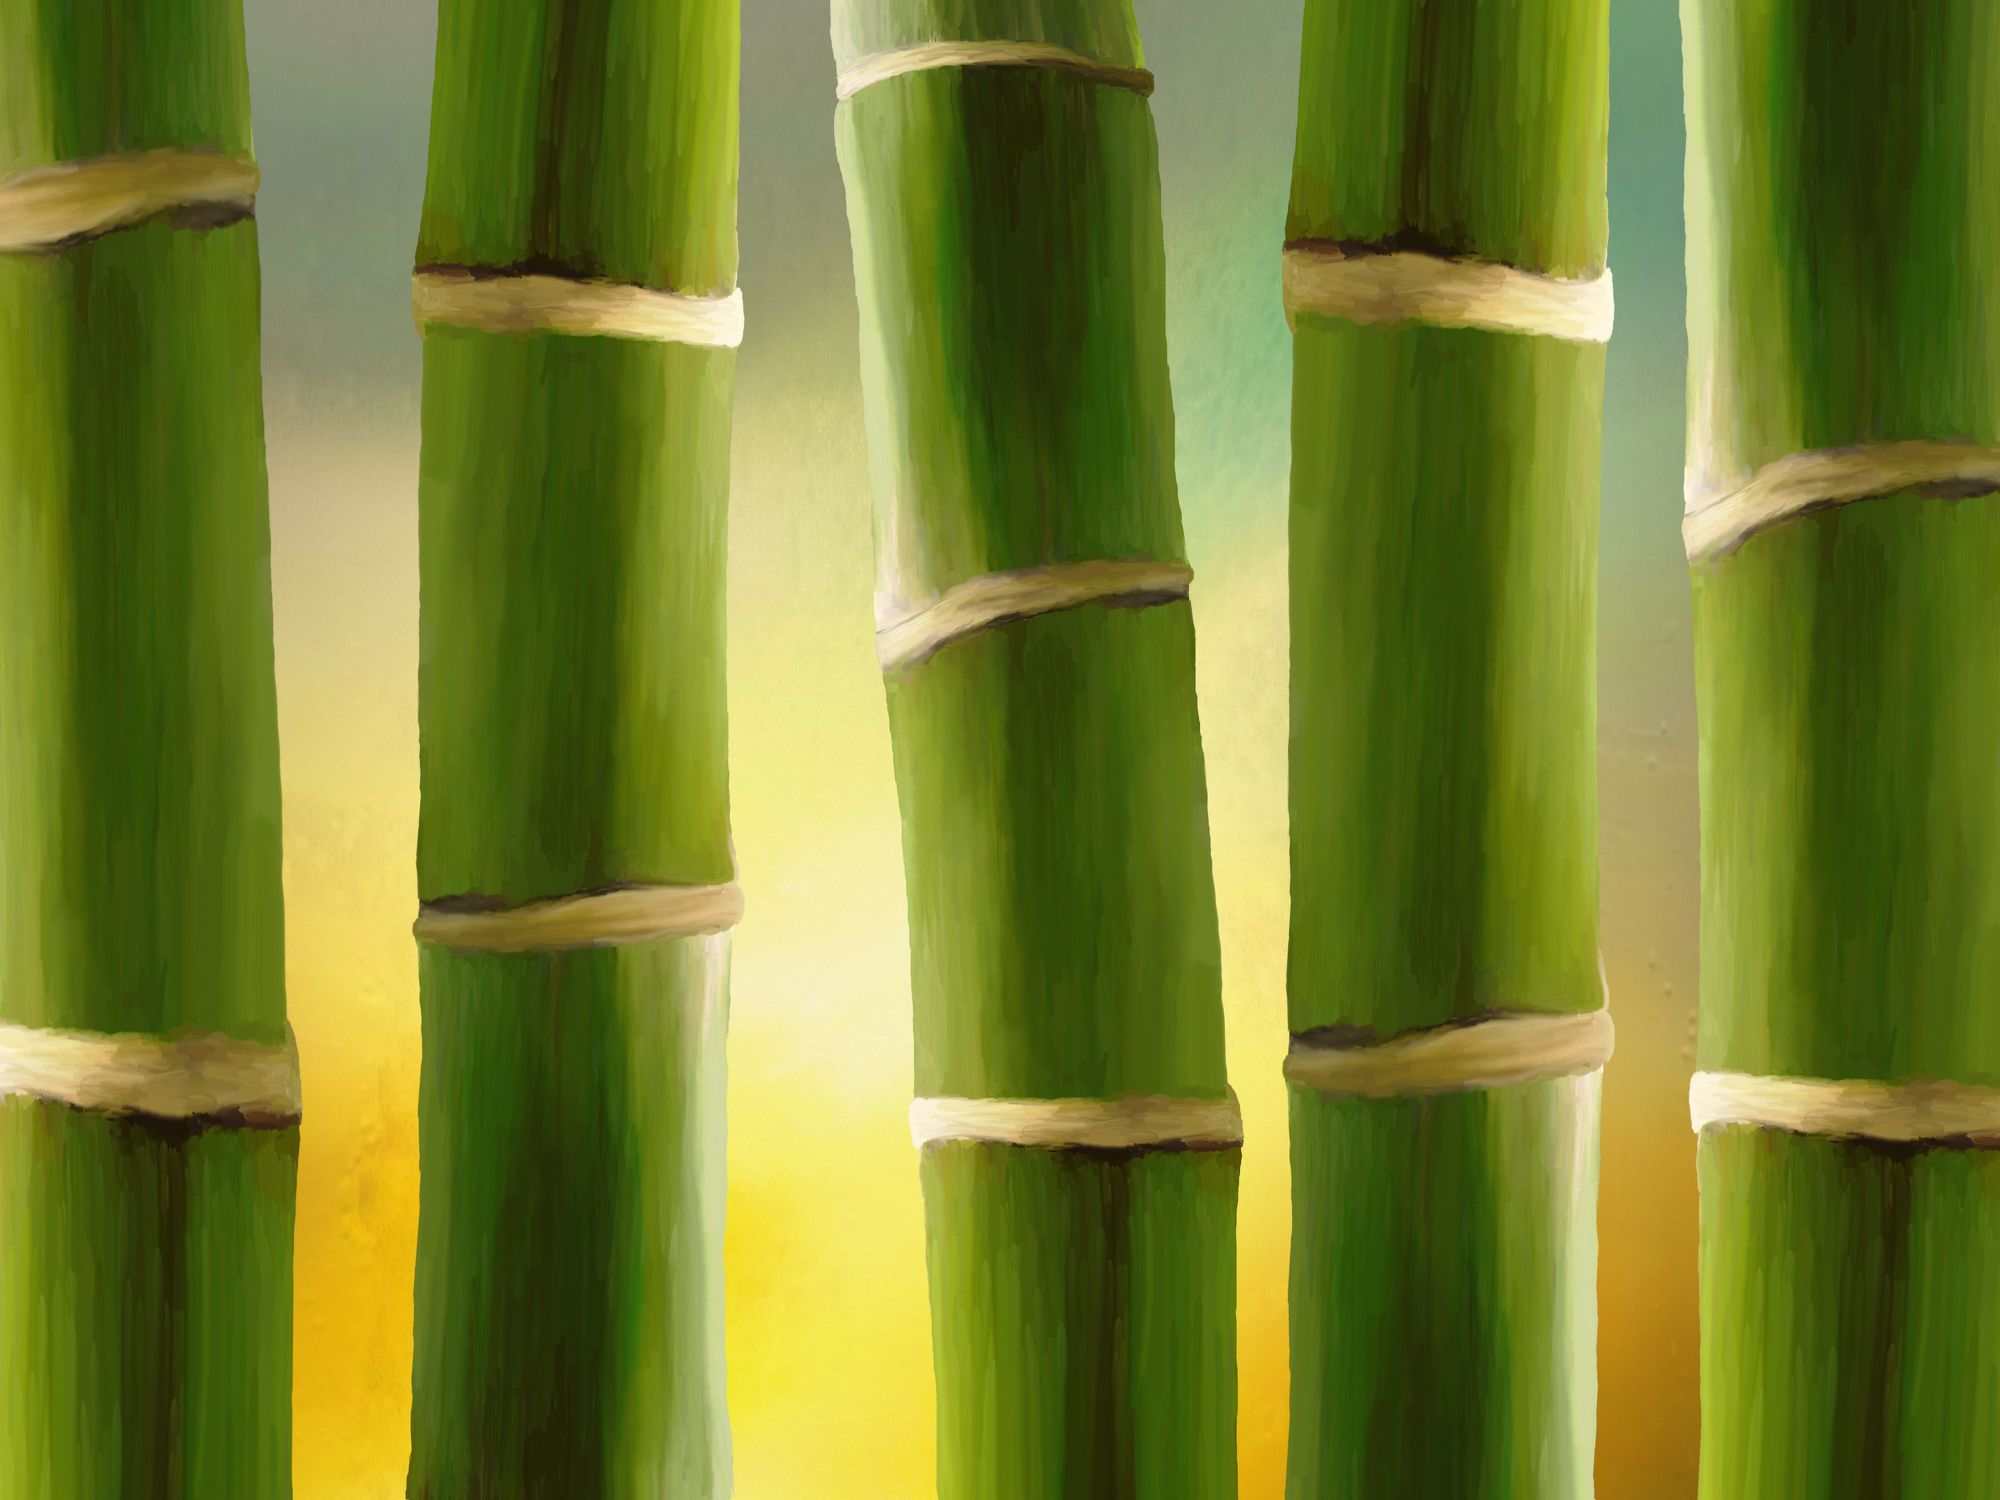 Bild mit Pflanzen, Bambus, Pflanze, Wellness, bambuswald, bambusstangen, bambusrohr, bambuspflanze, Bambusblatt, Bambusblätter